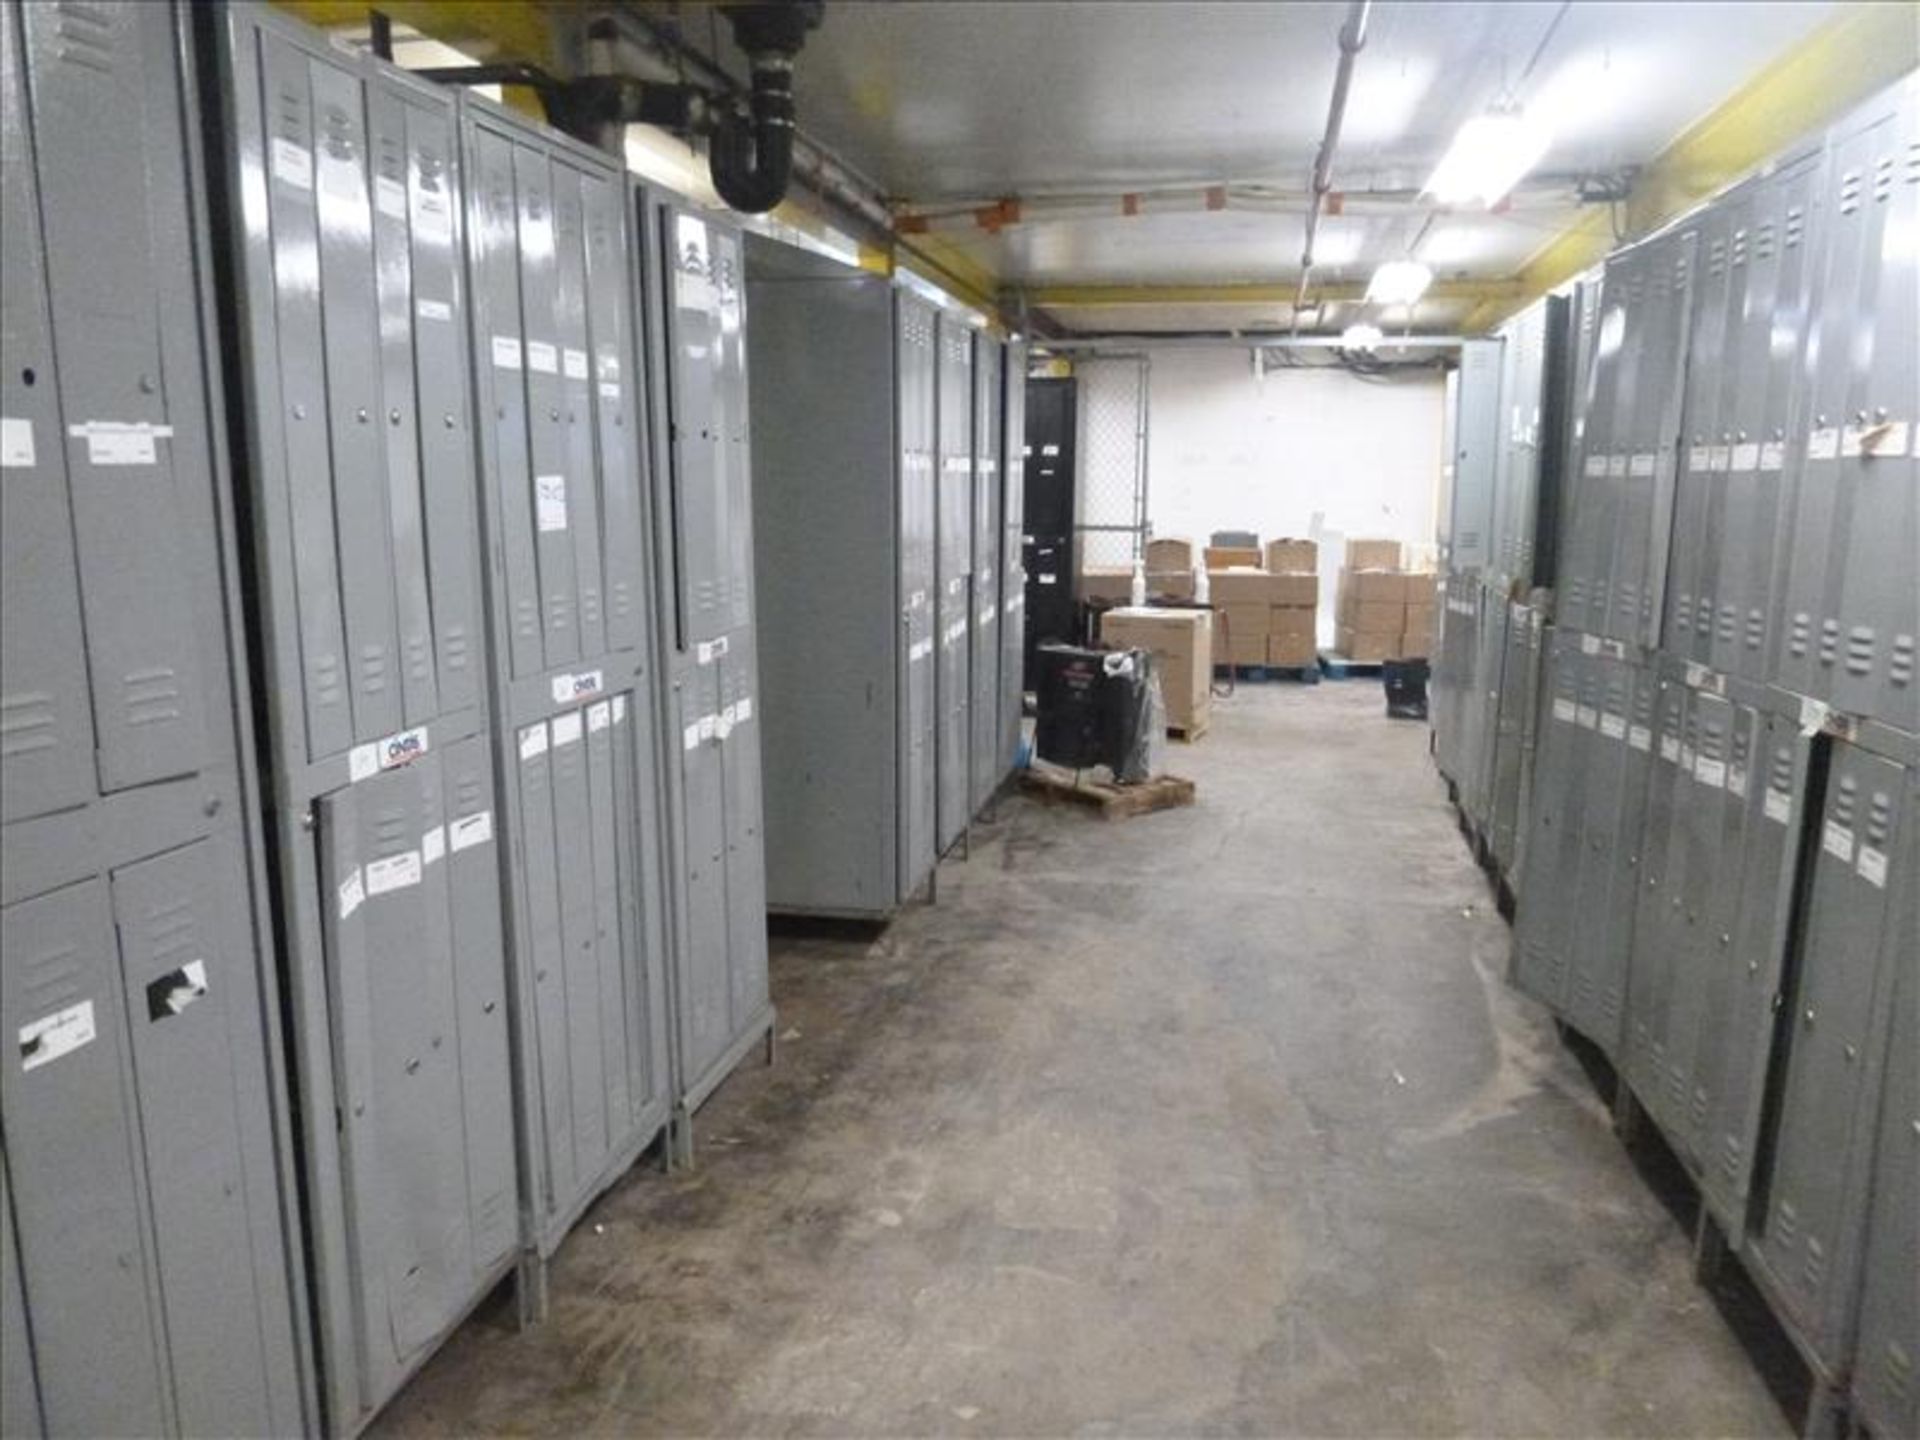 (202) half-door steel clothes lockers (located at 150 Bartor Rd Toronto ON Canada)